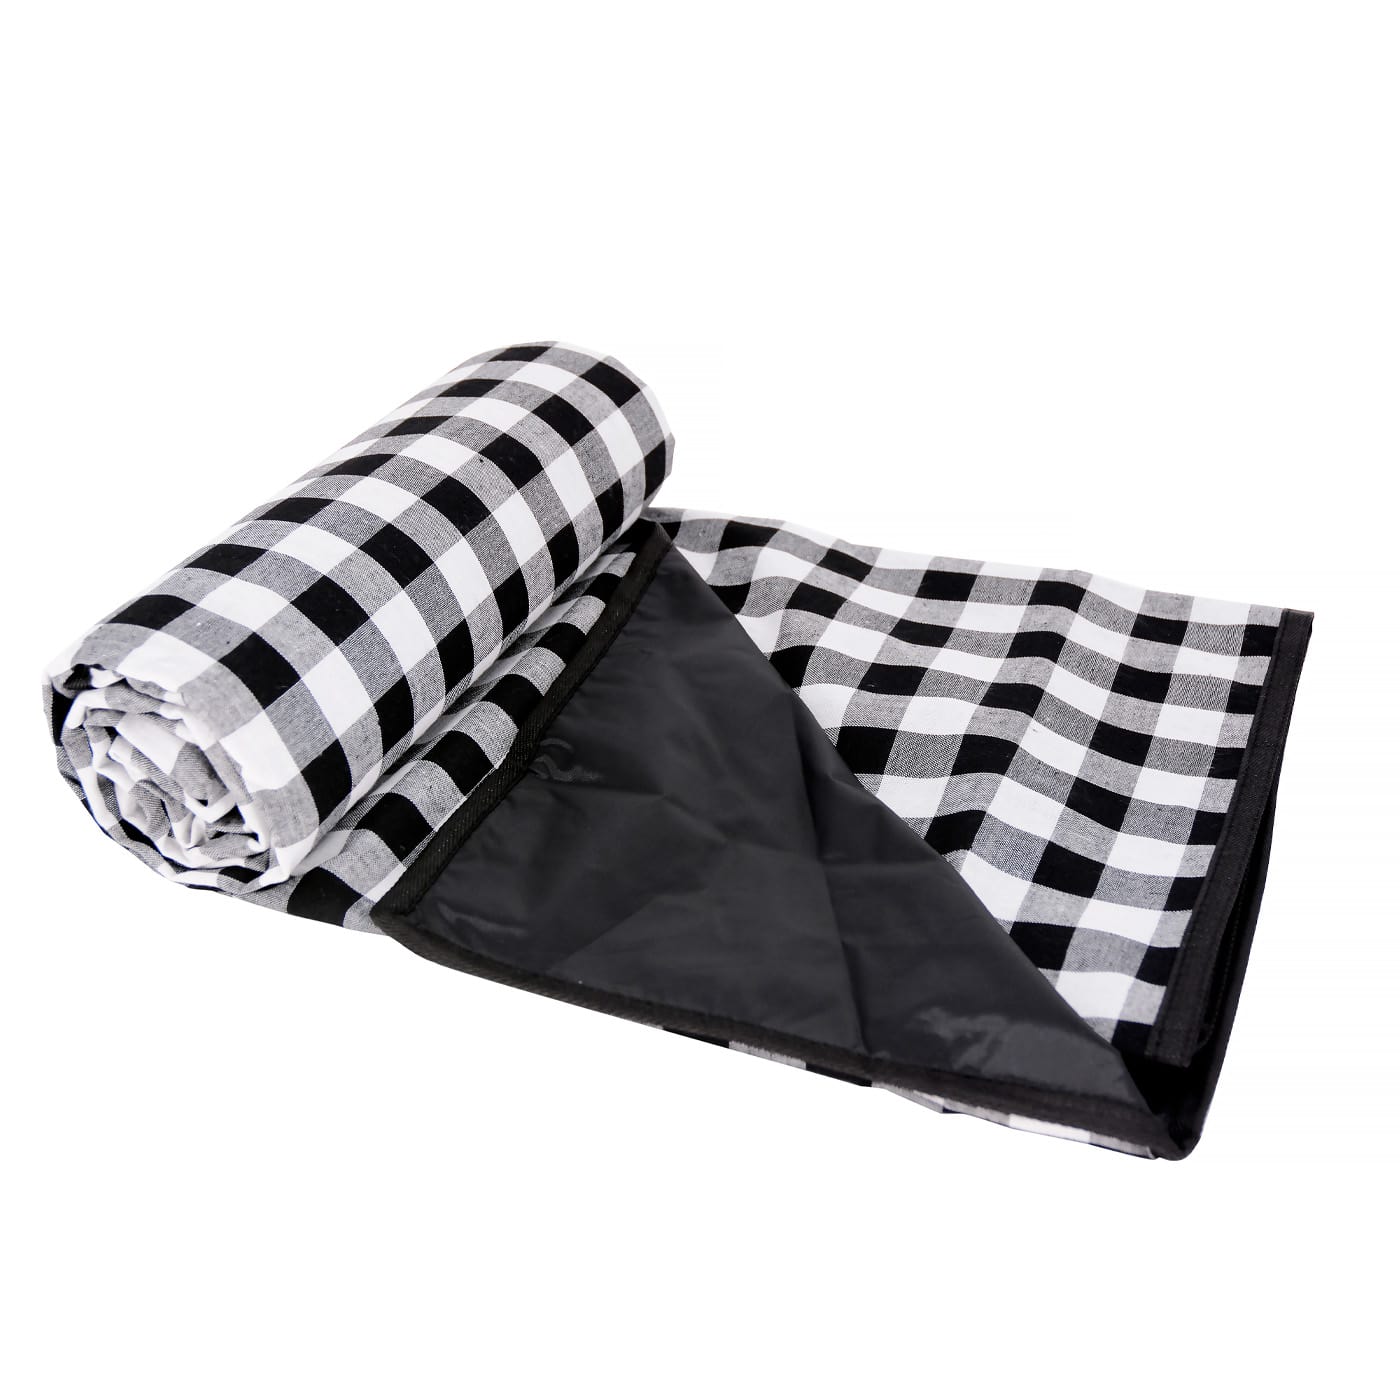 Waterproof picnic blanket Montaigne XL